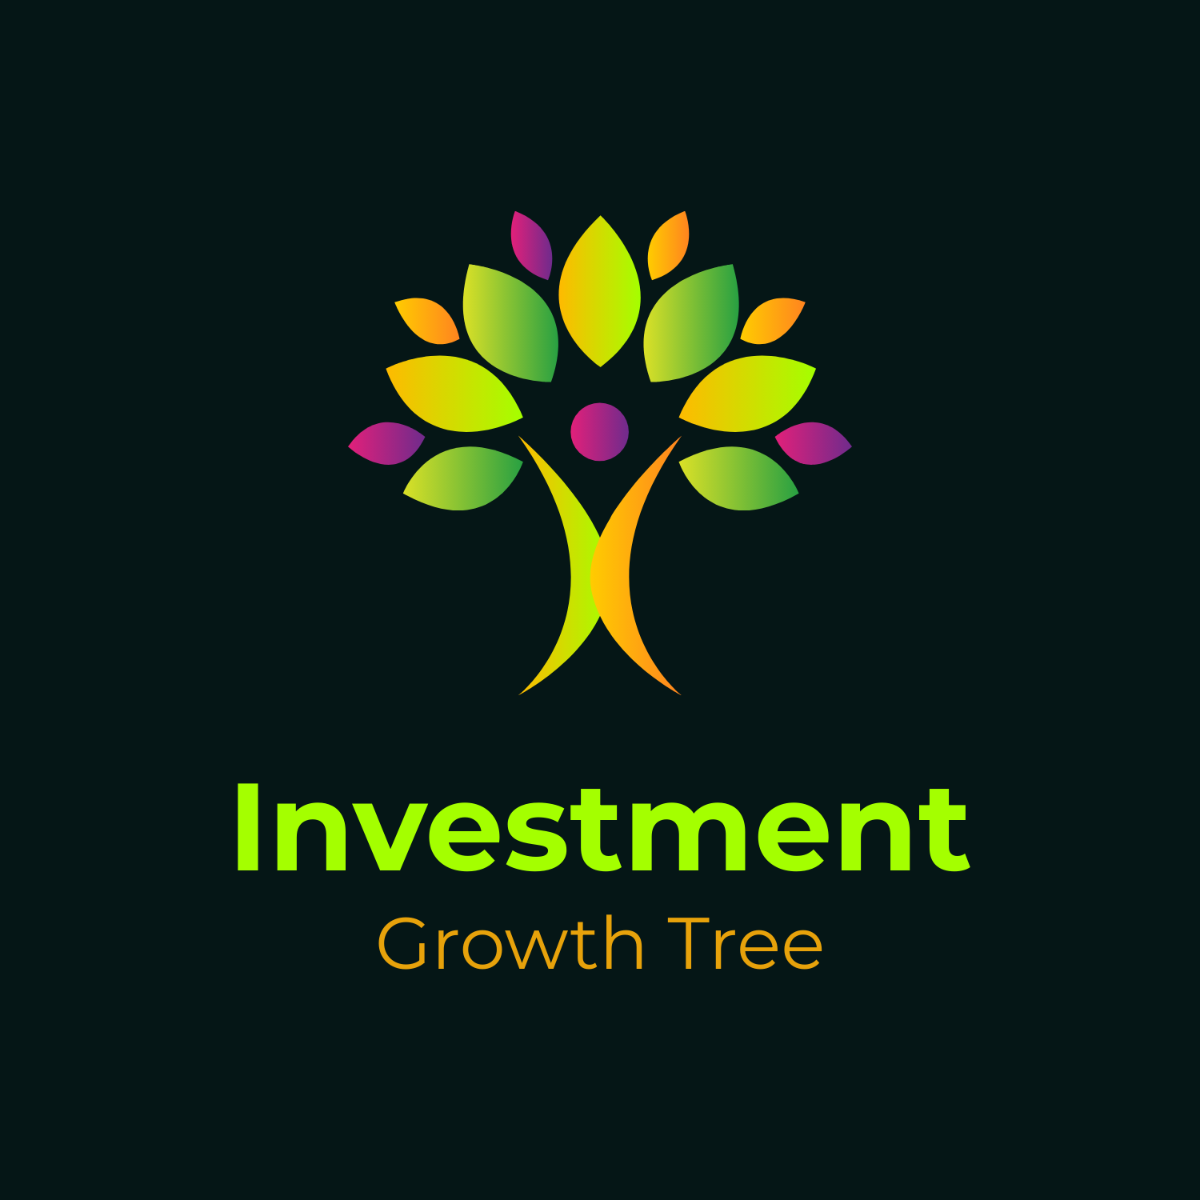 Investment Growth Tree Logo